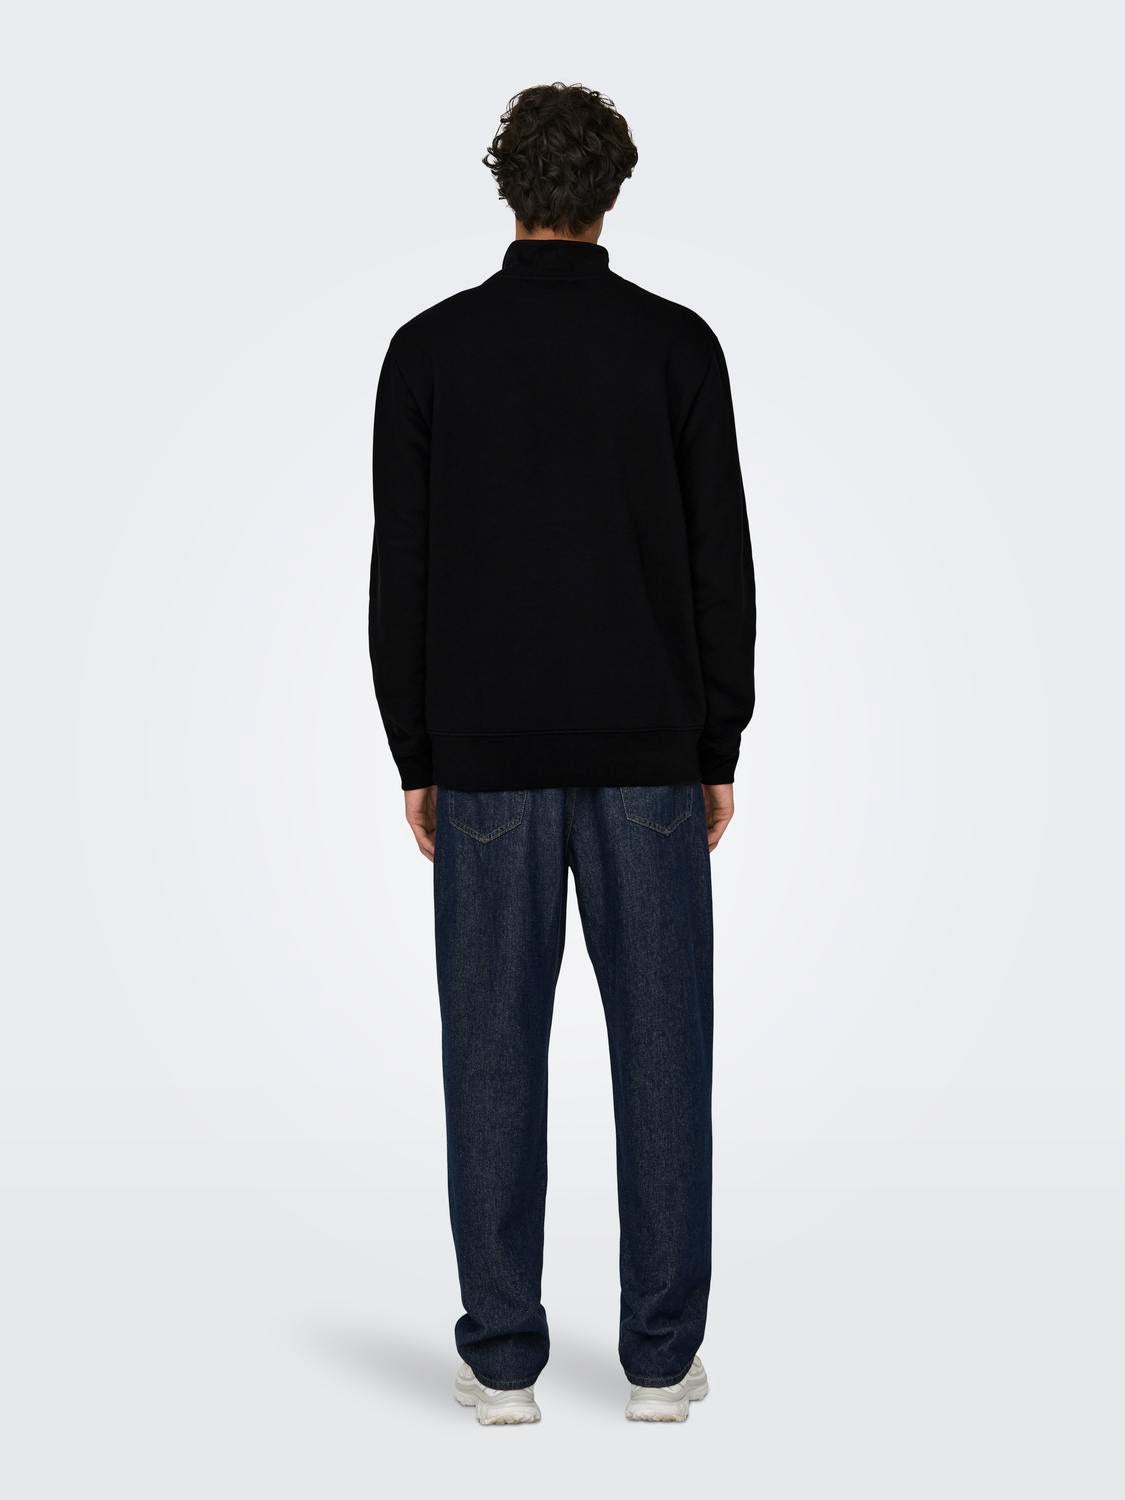 Half-zip sweatshirt with high neck | Black | ONLY & SONS®